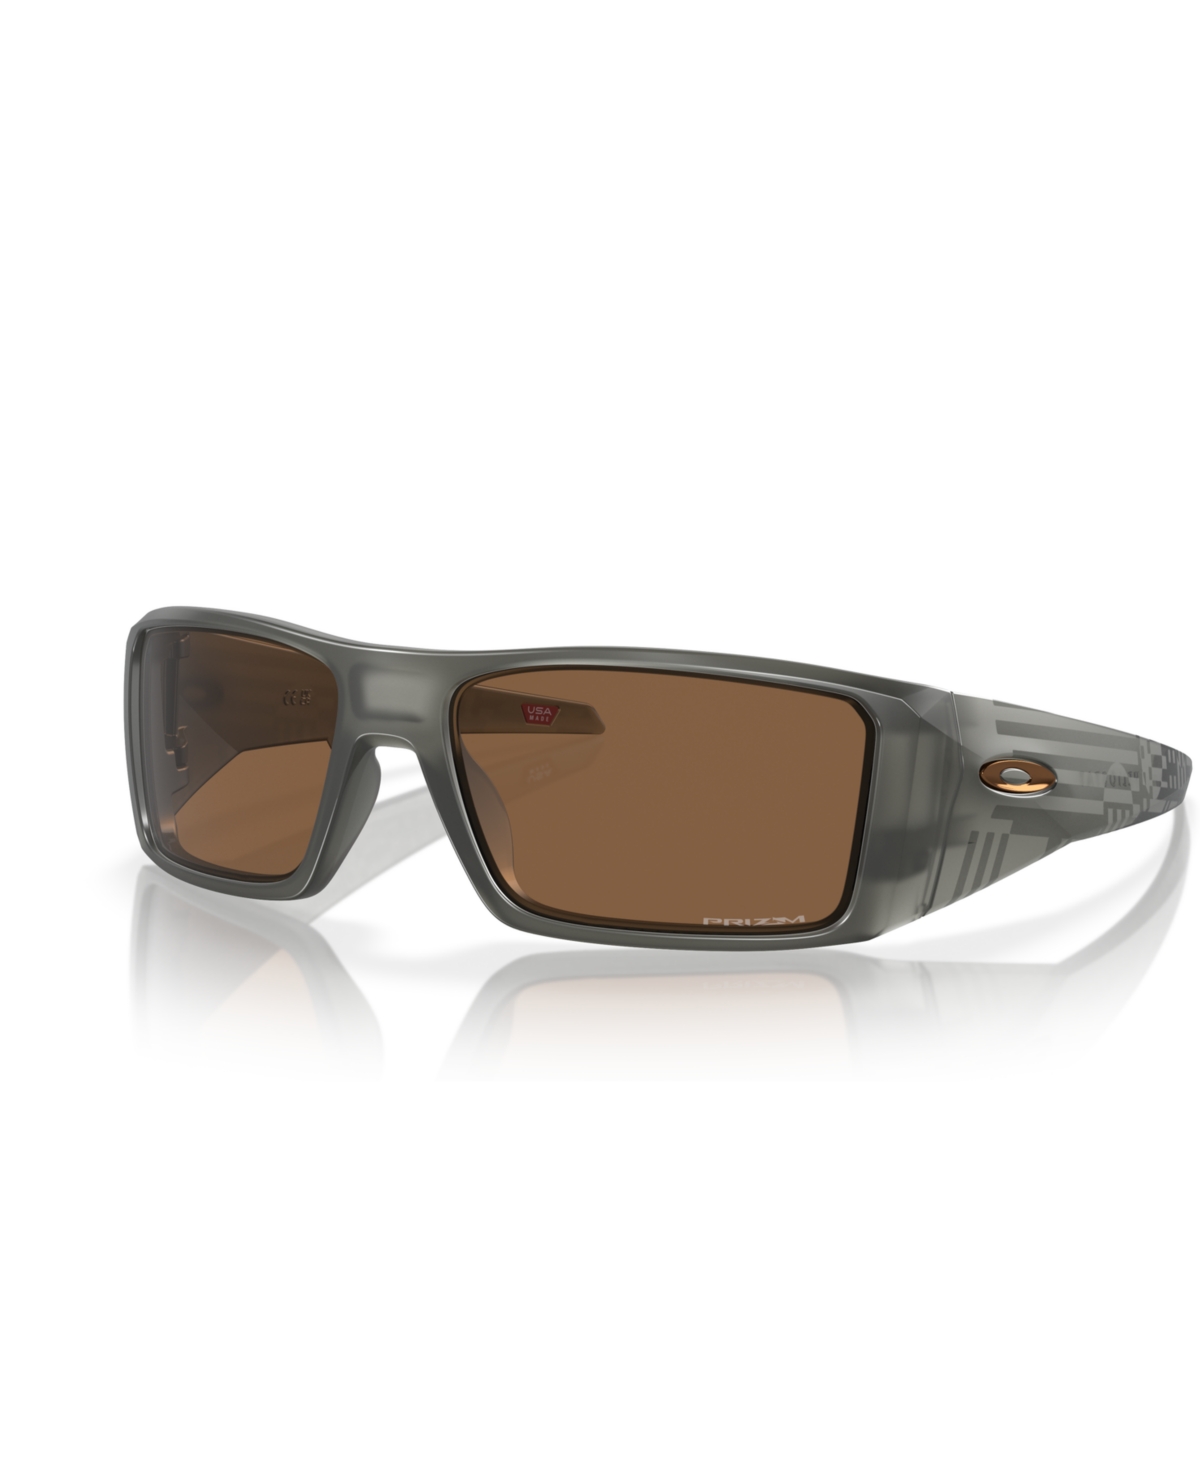 Men's Heliostat Sunglasses, OO9231-0161 61 - Gray Smoke